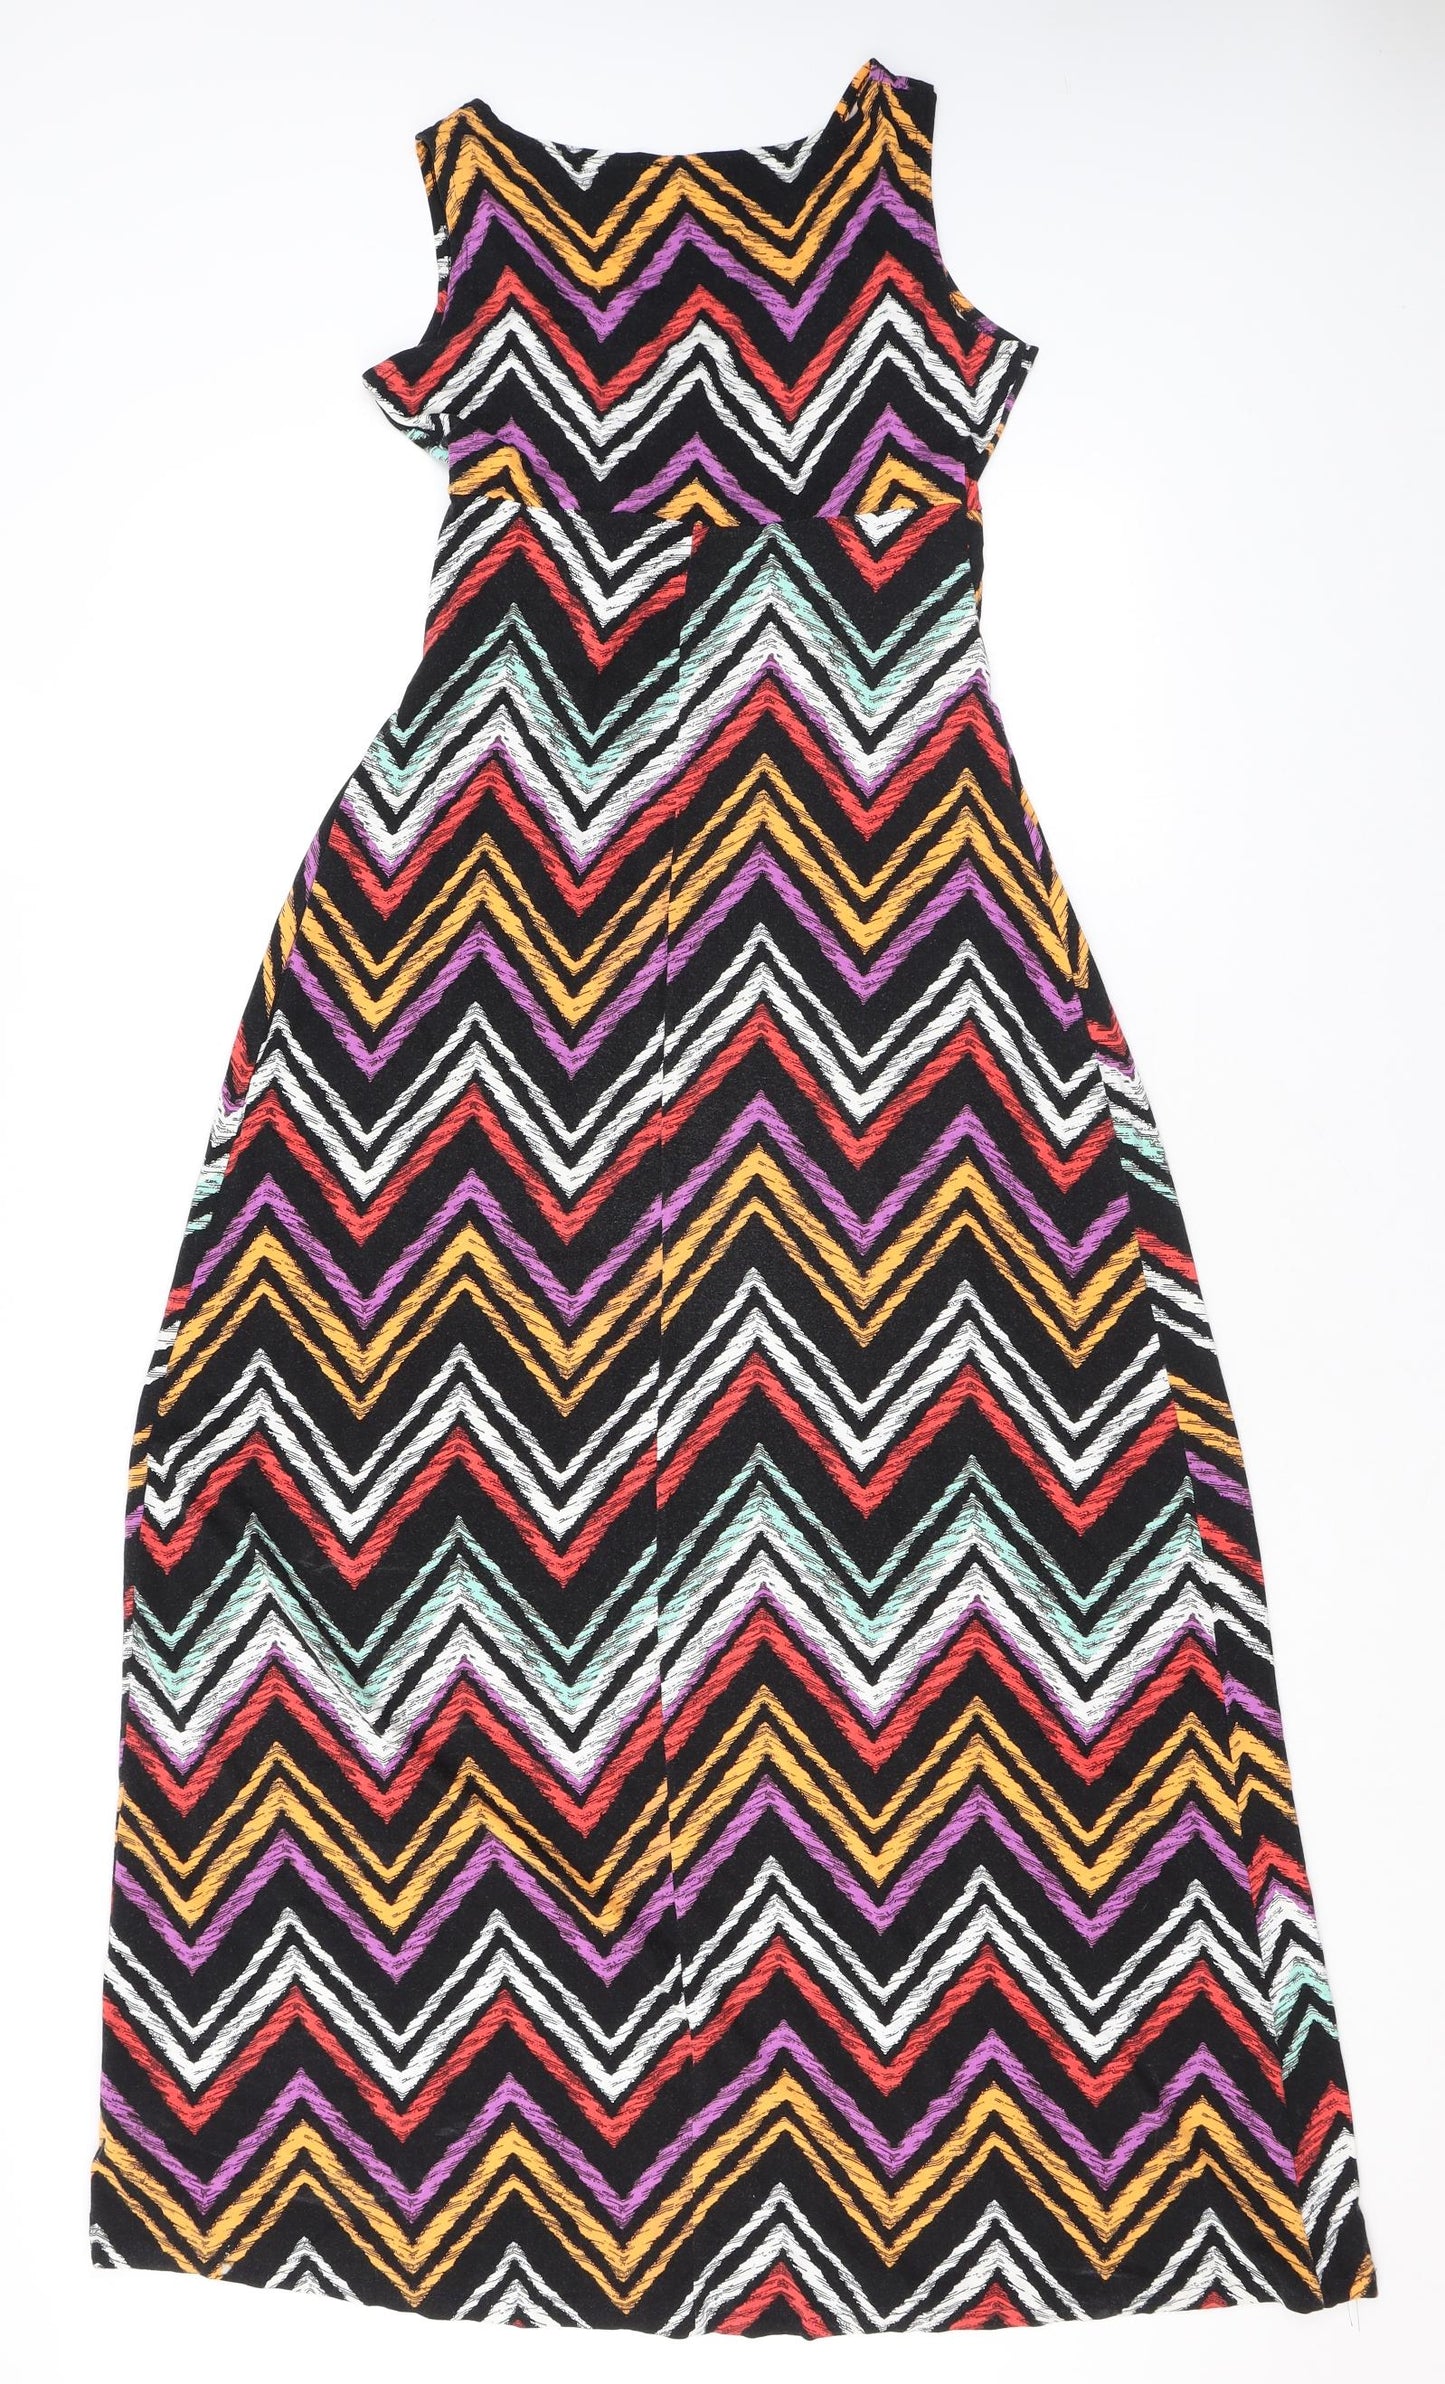 M&Co Womens Multicoloured Geometric Viscose Tank Dress Size 10 V-Neck Pullover - Knot Detail